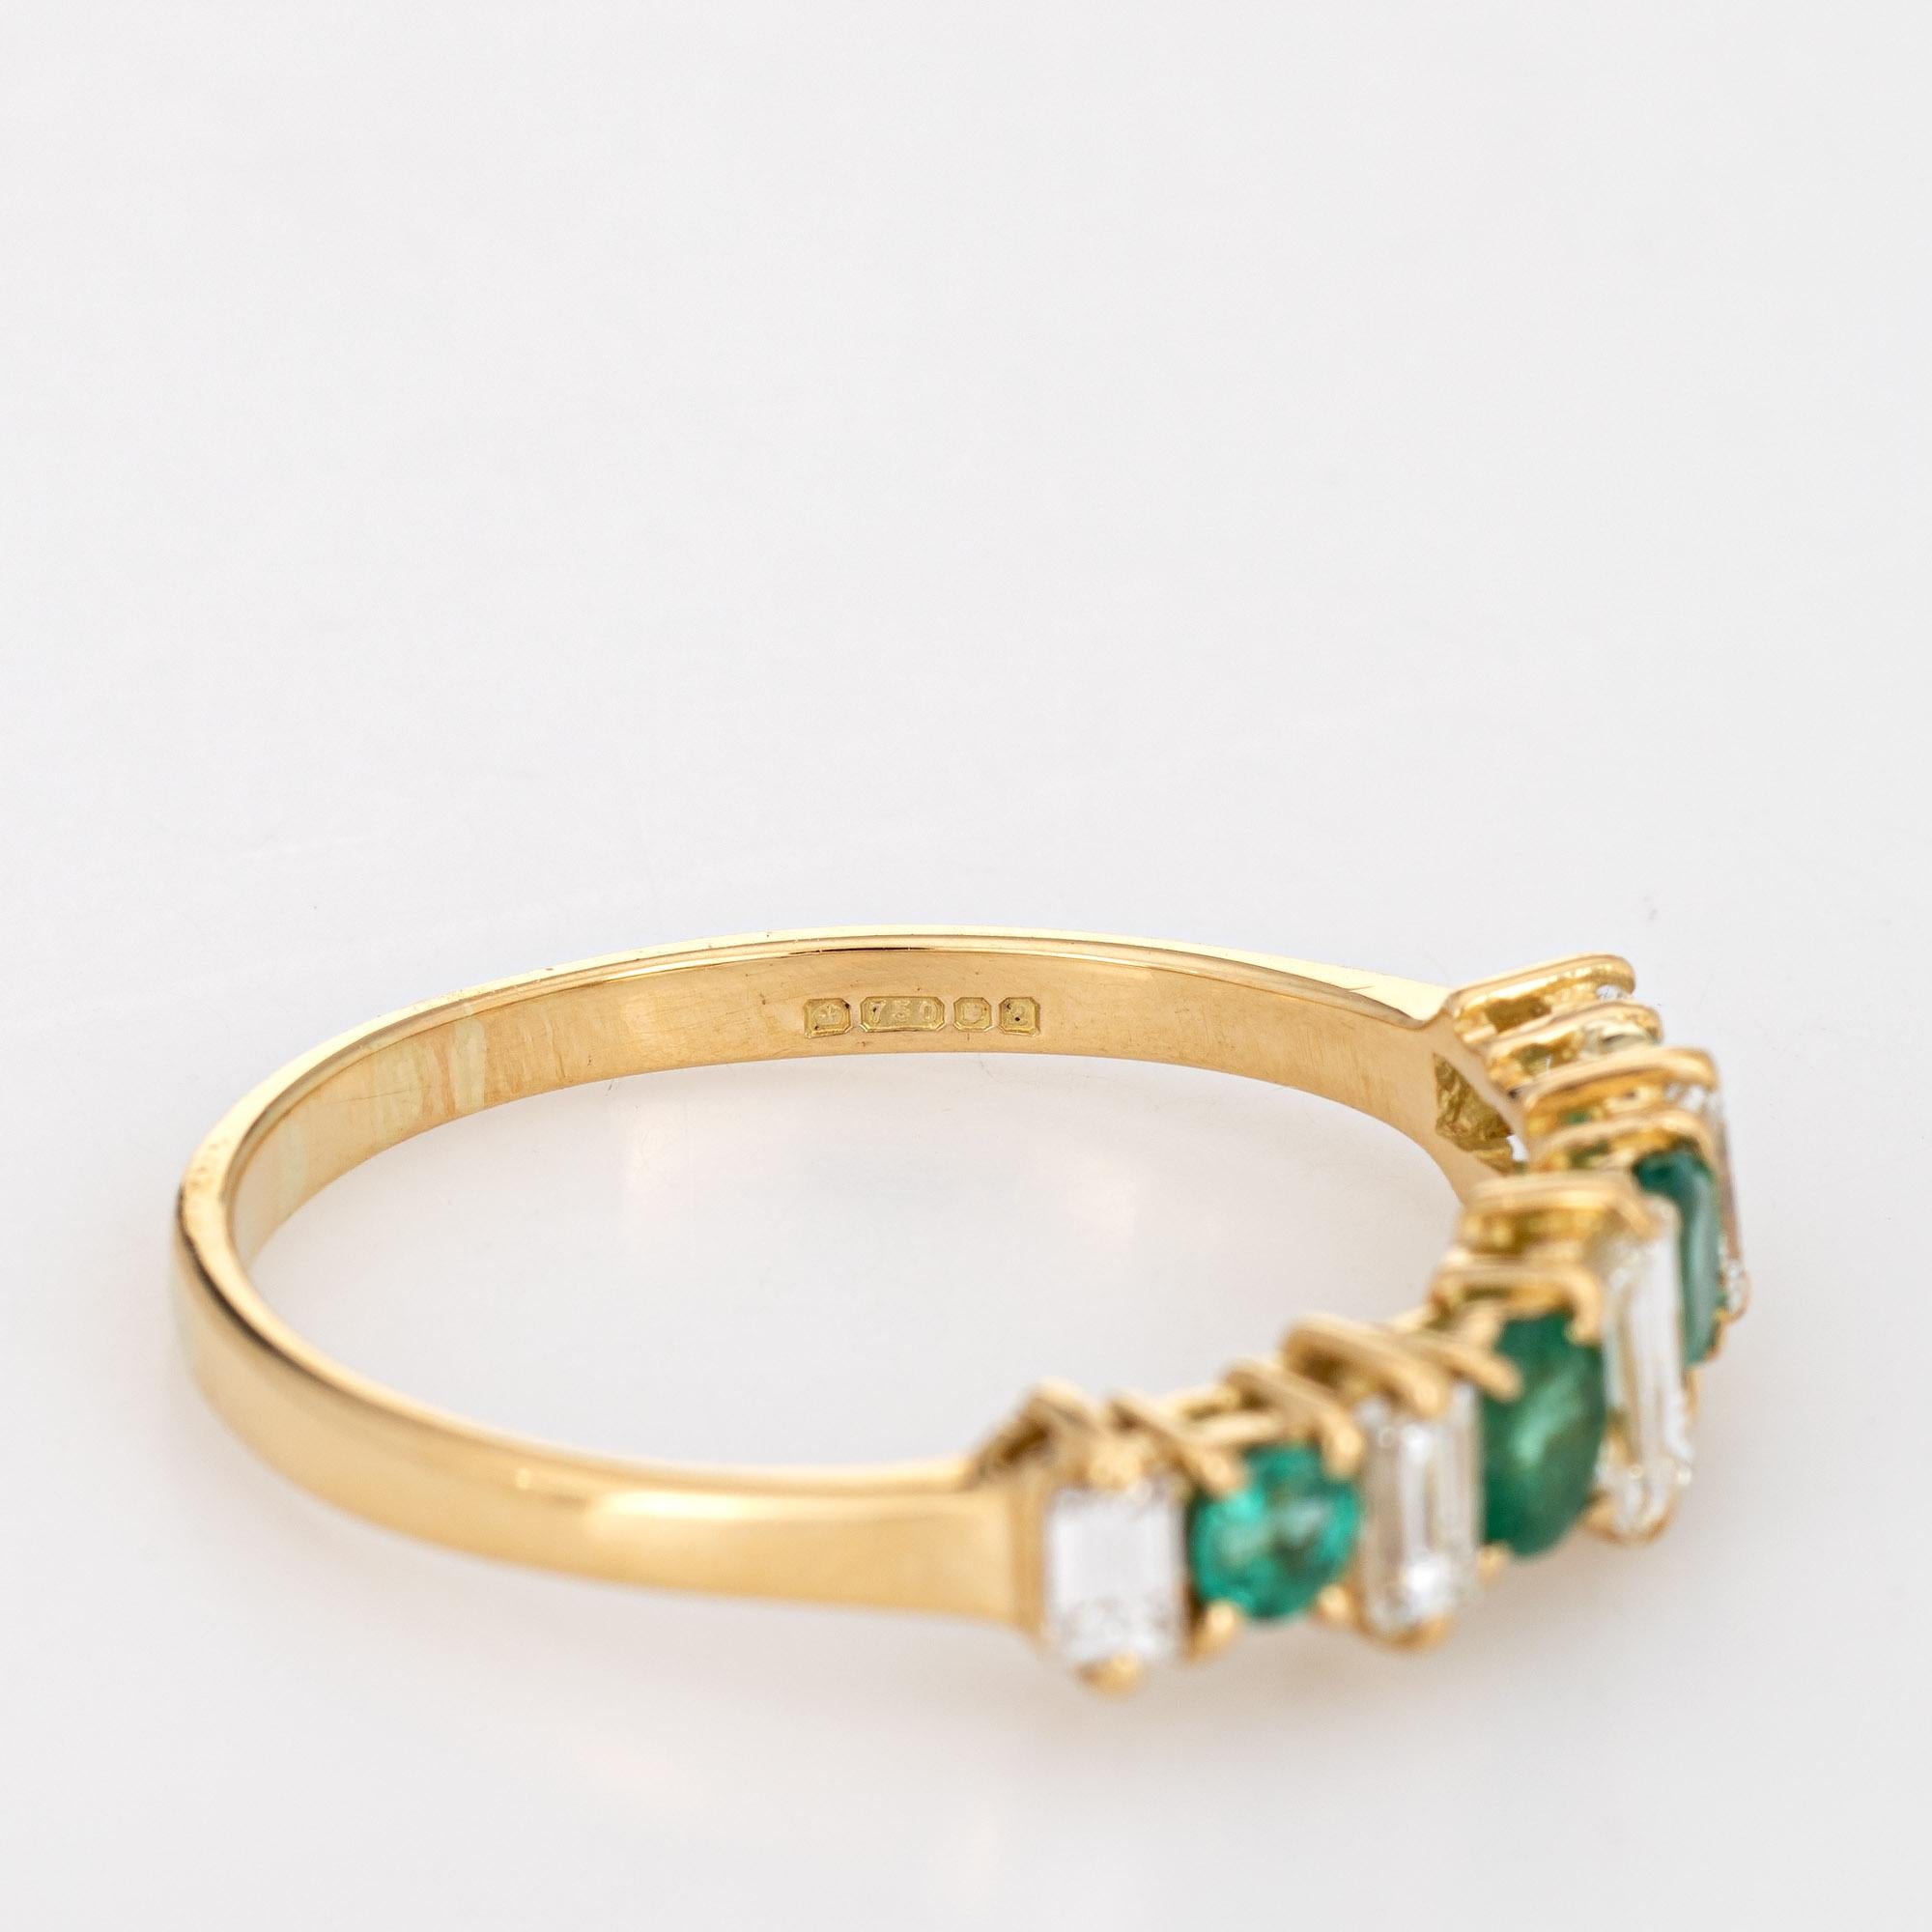 Baguette Cut Emerald Diamond Ring Vintage 18 Karat Yellow Gold Wedding Band Estate Jewelry